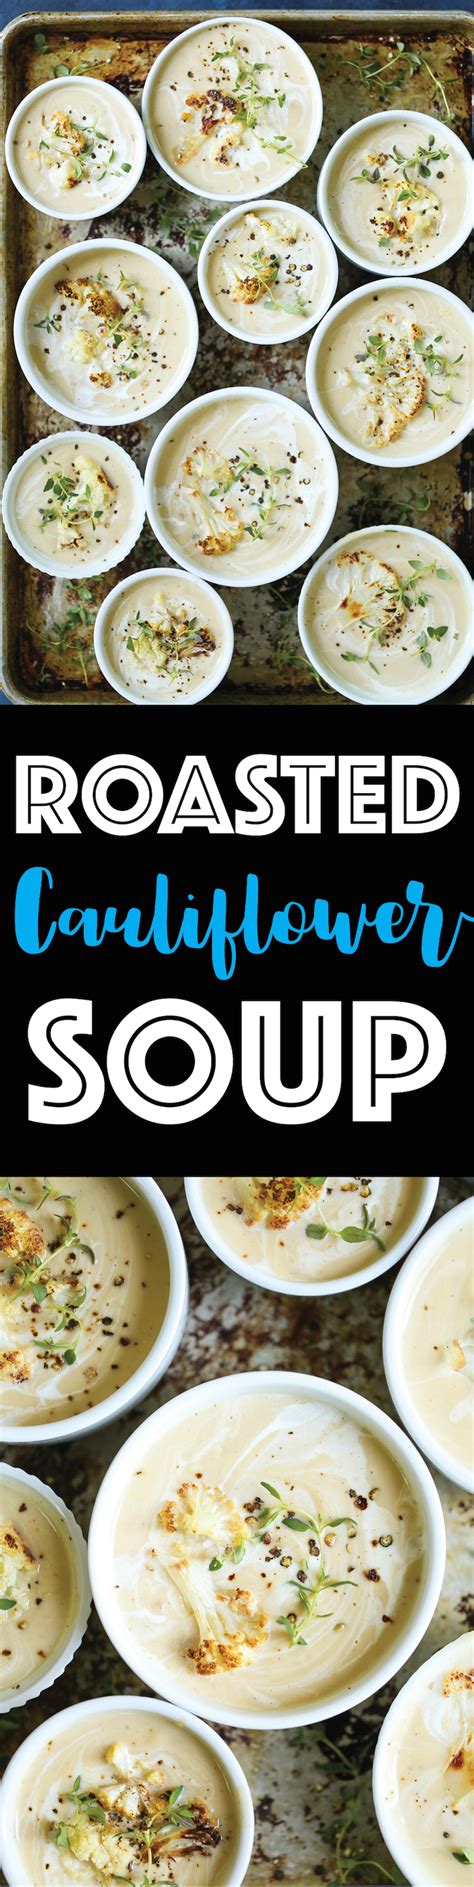 roasted-cauliflower-soup-damn-delicious image